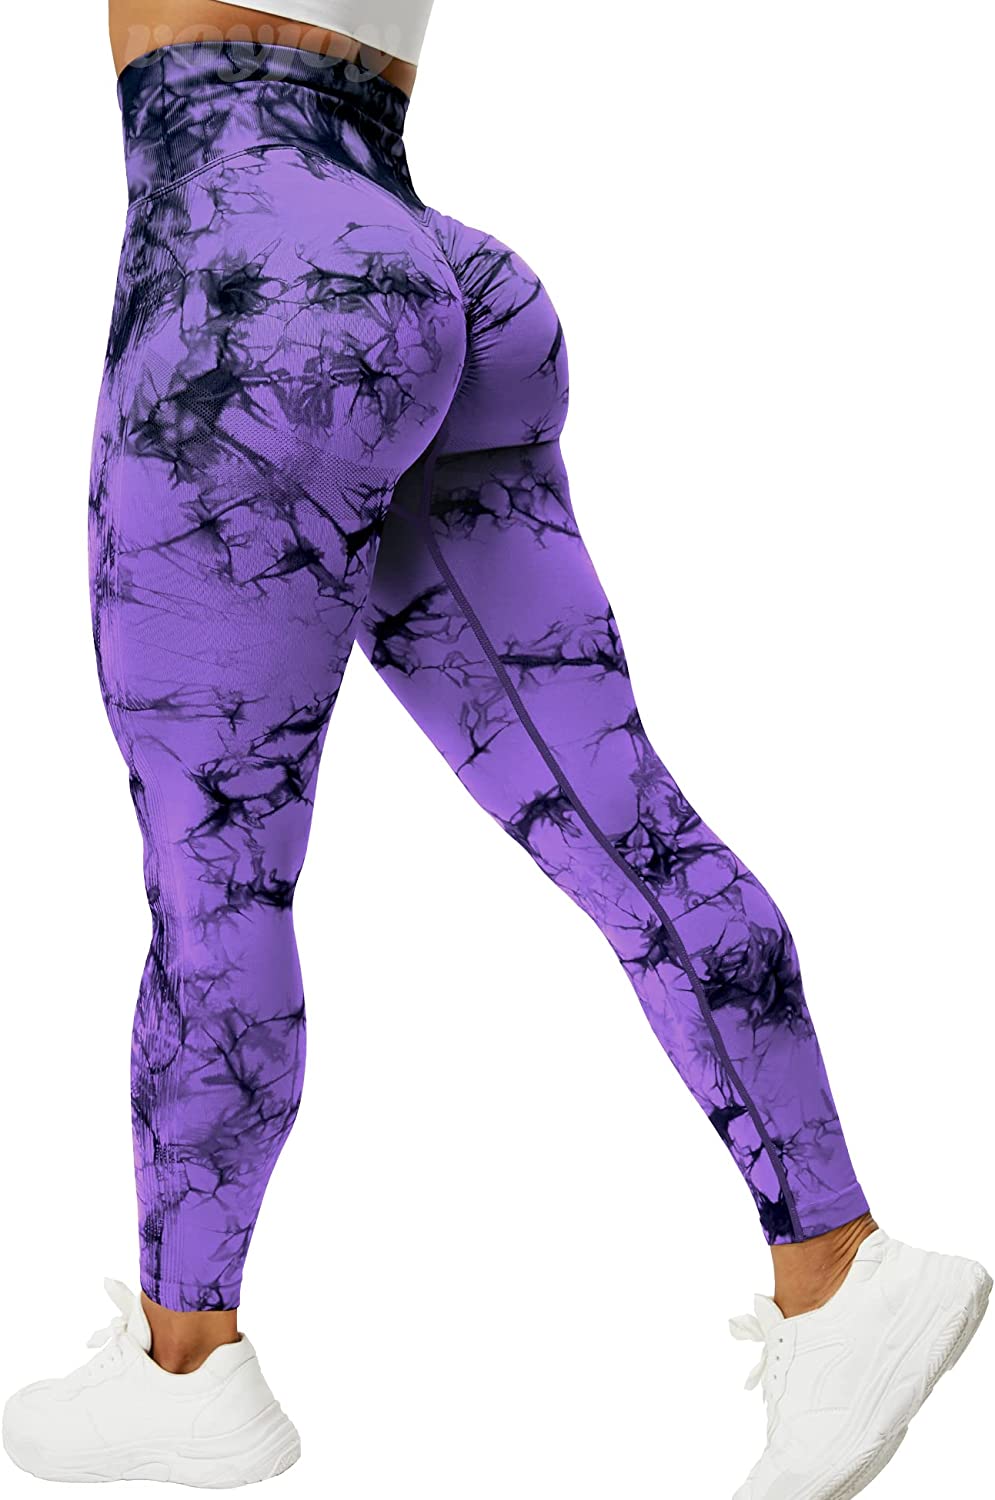 Buy VOYJOY Tie Dye Seamless Leggings for Women High Waist Yoga Pants, Scrunch  Butt Lifting Elastic Tights, #4 Black Gray, X-Small at